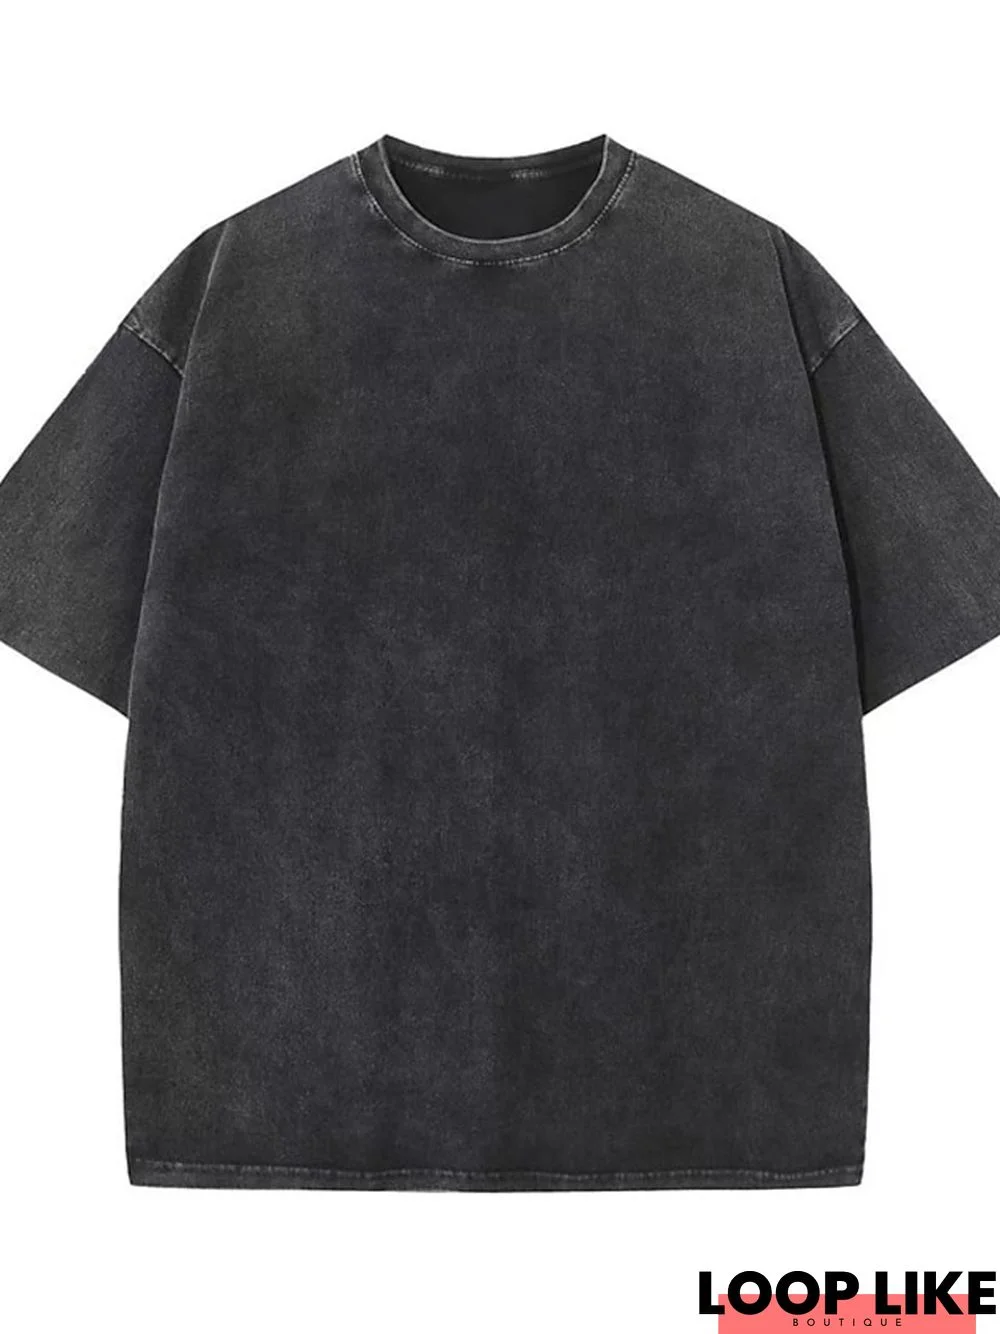 Men's T shirt Tee 100% Cotton Acid Wash Shirt Oversized Shirt Tee Top Plain Crew Neck Outdoor Sport Short Sleeve Clothing Apparel Streetwear Designer Casual Daily